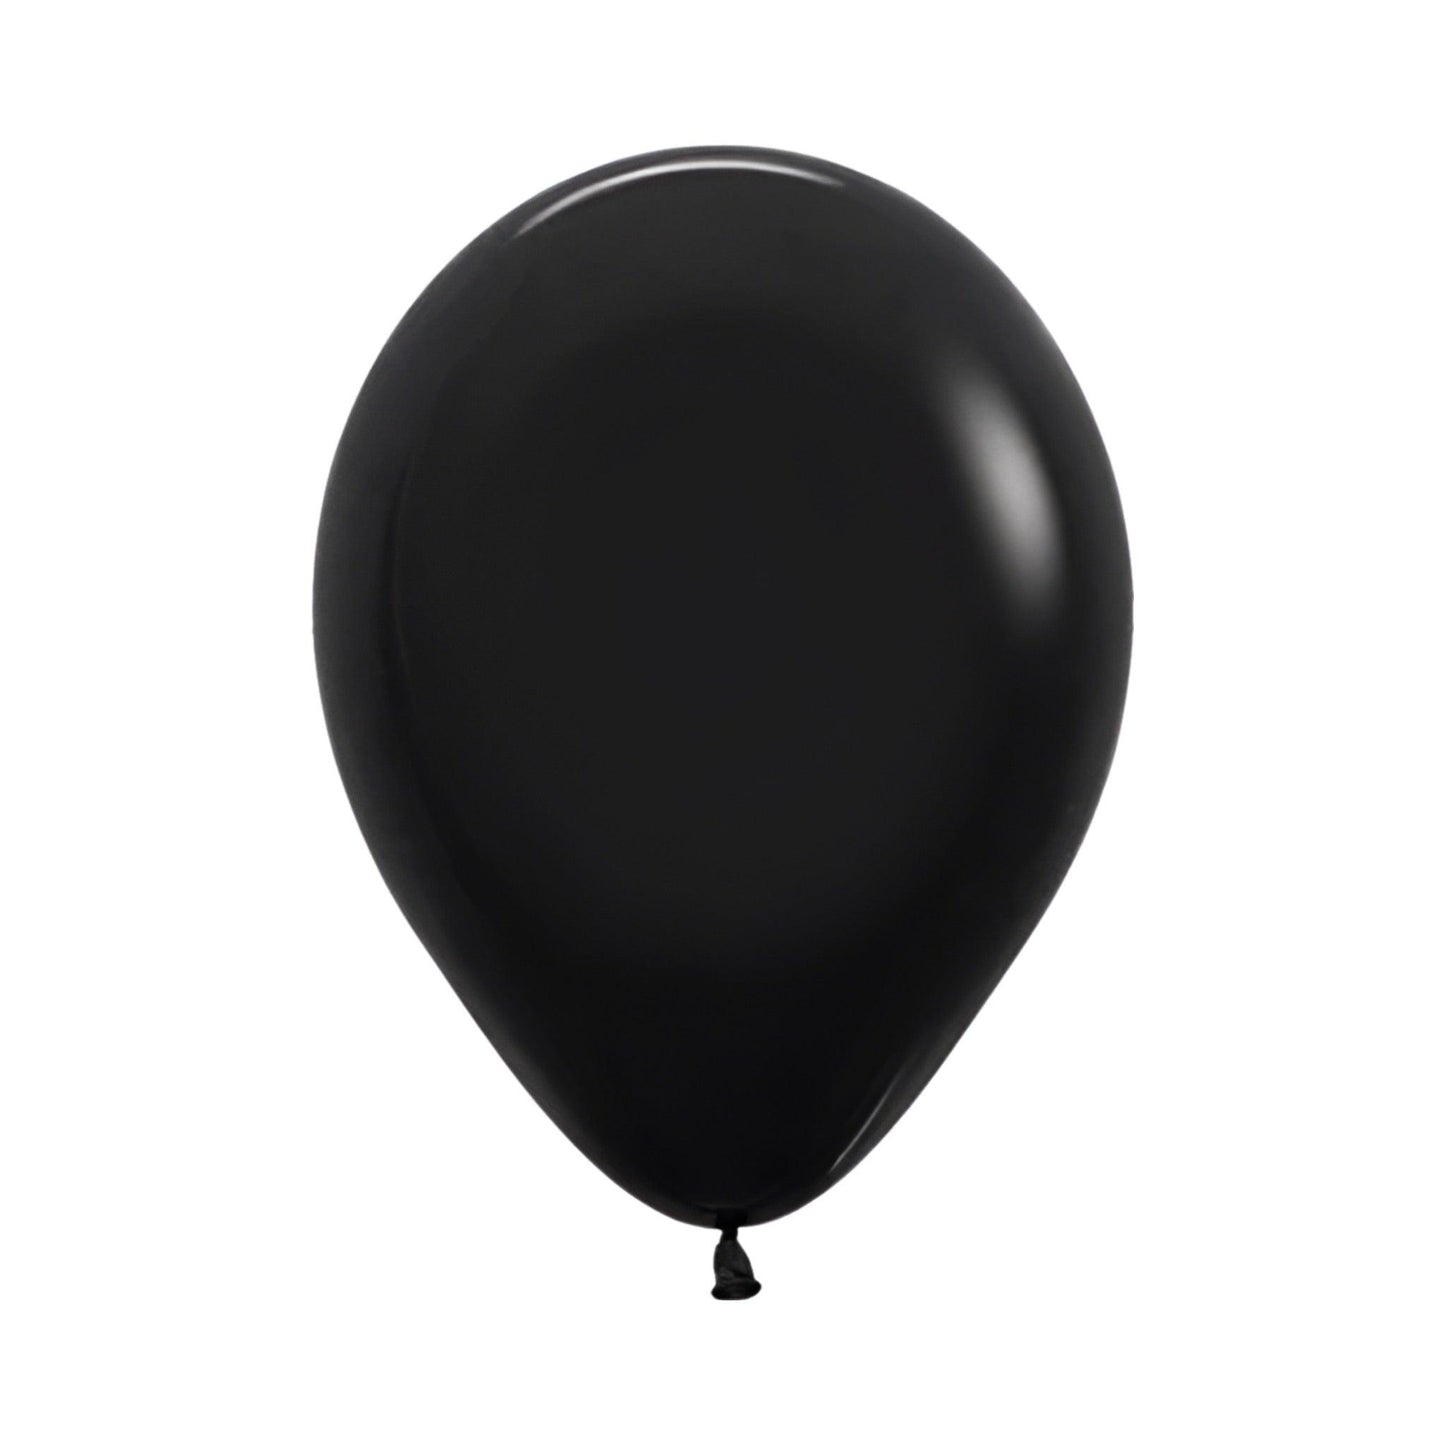 30cm Black standard Balloon. Helium quality.